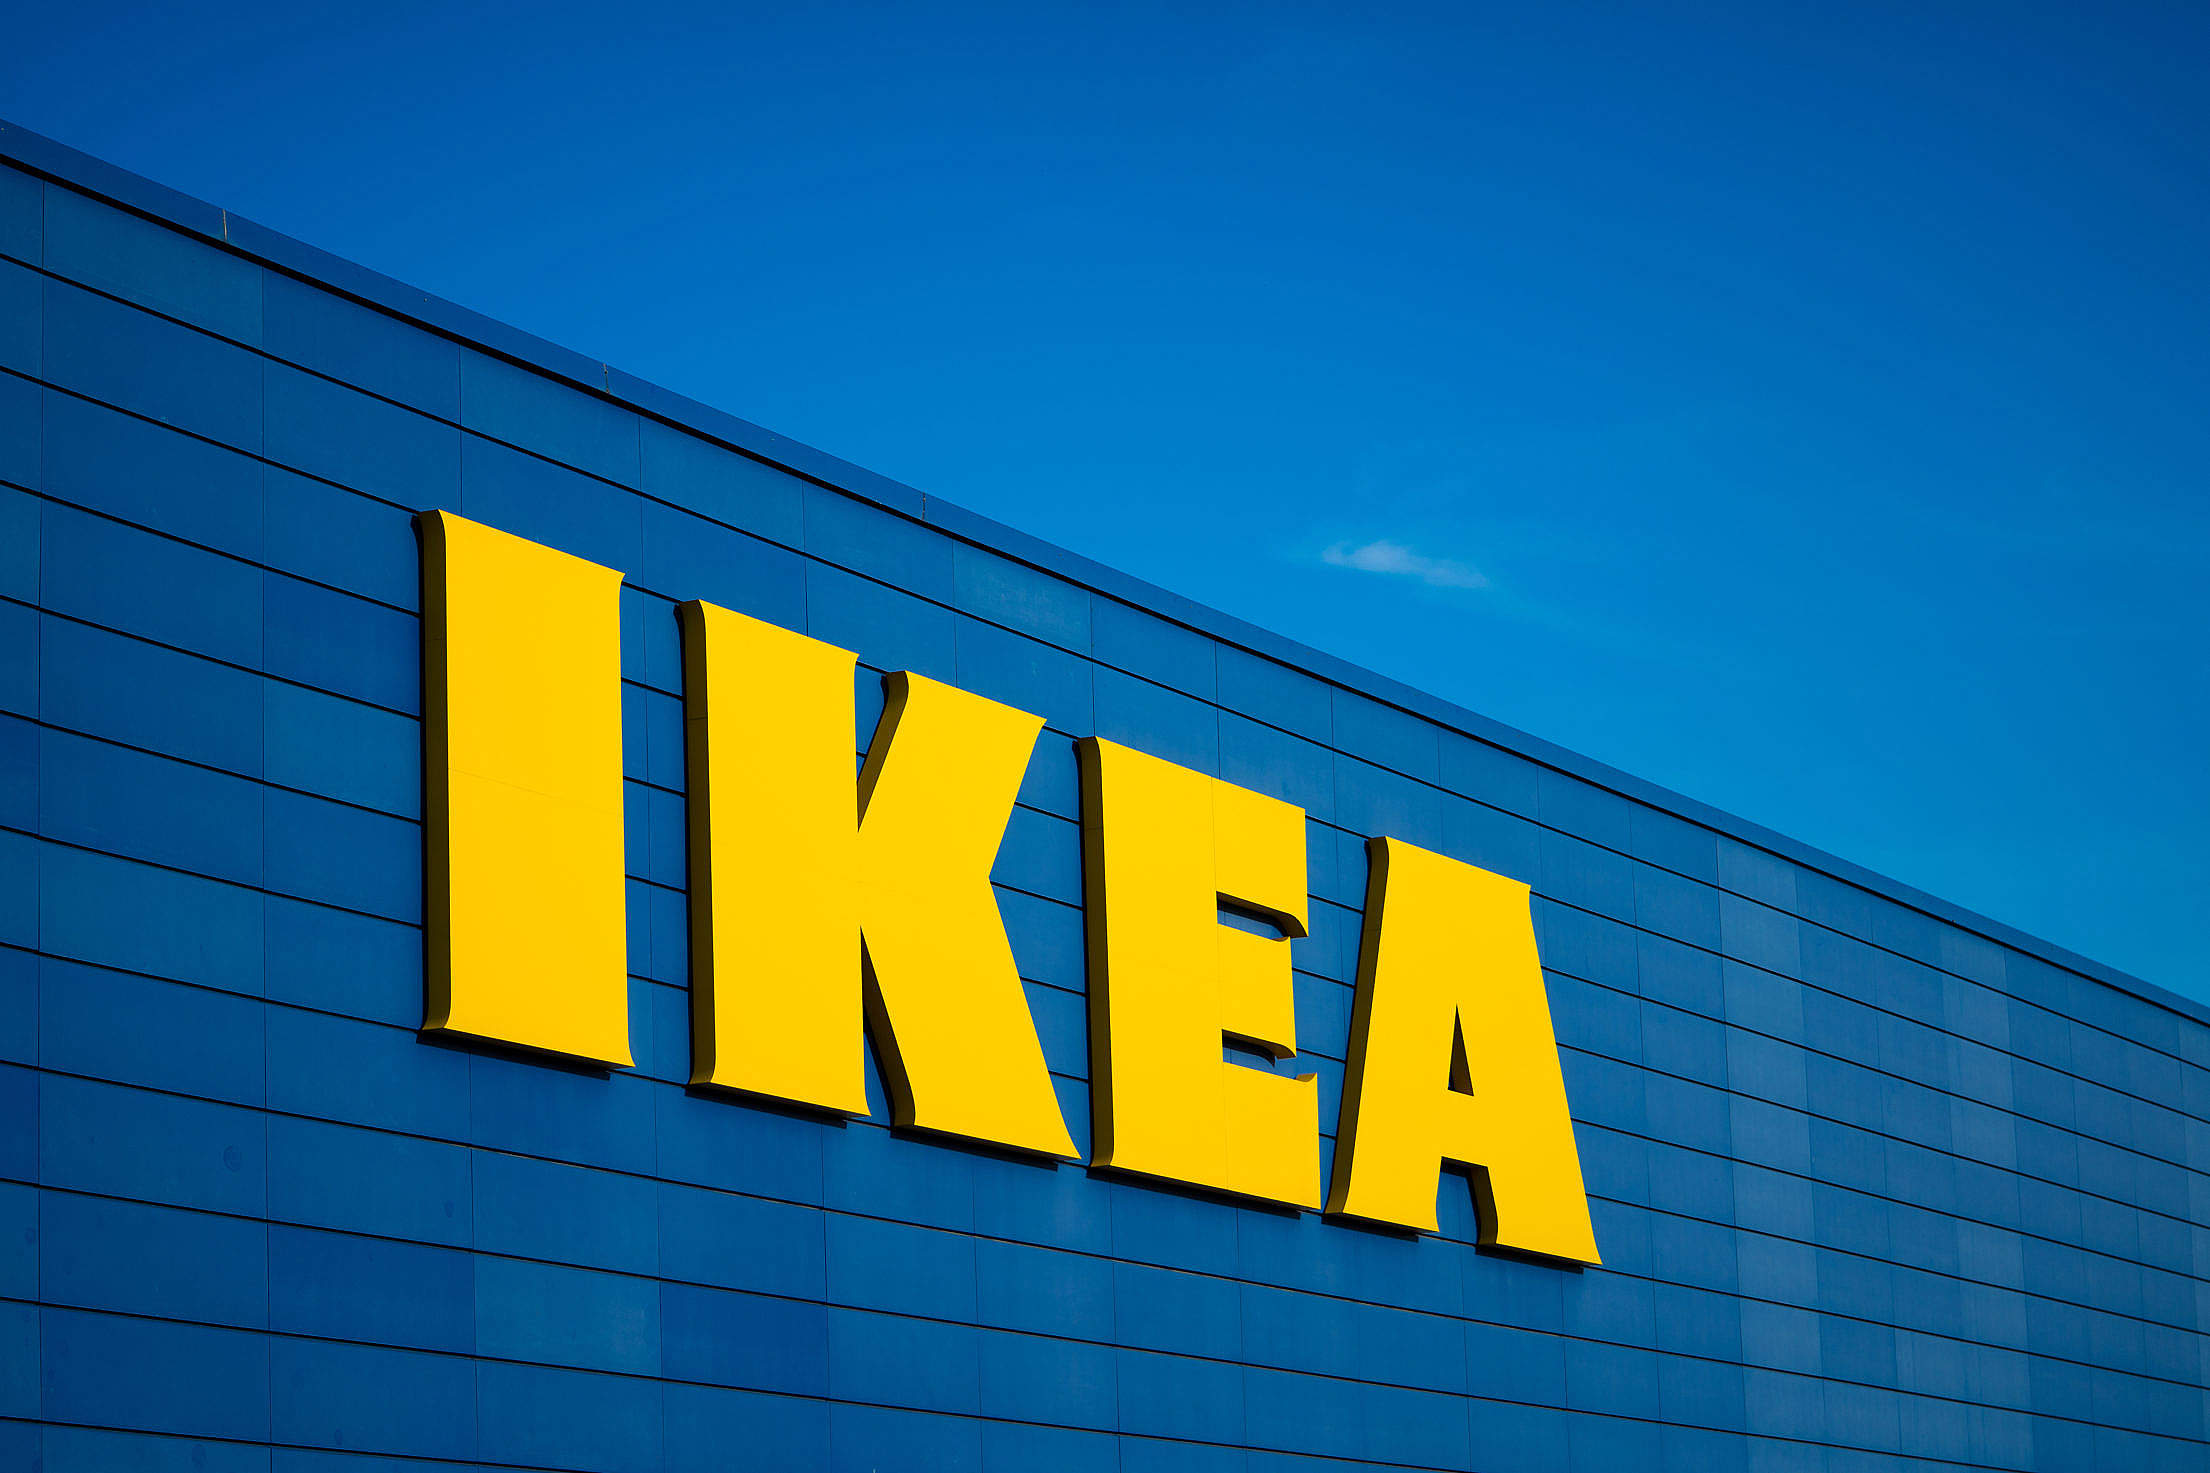 IKEA Store in Wembley